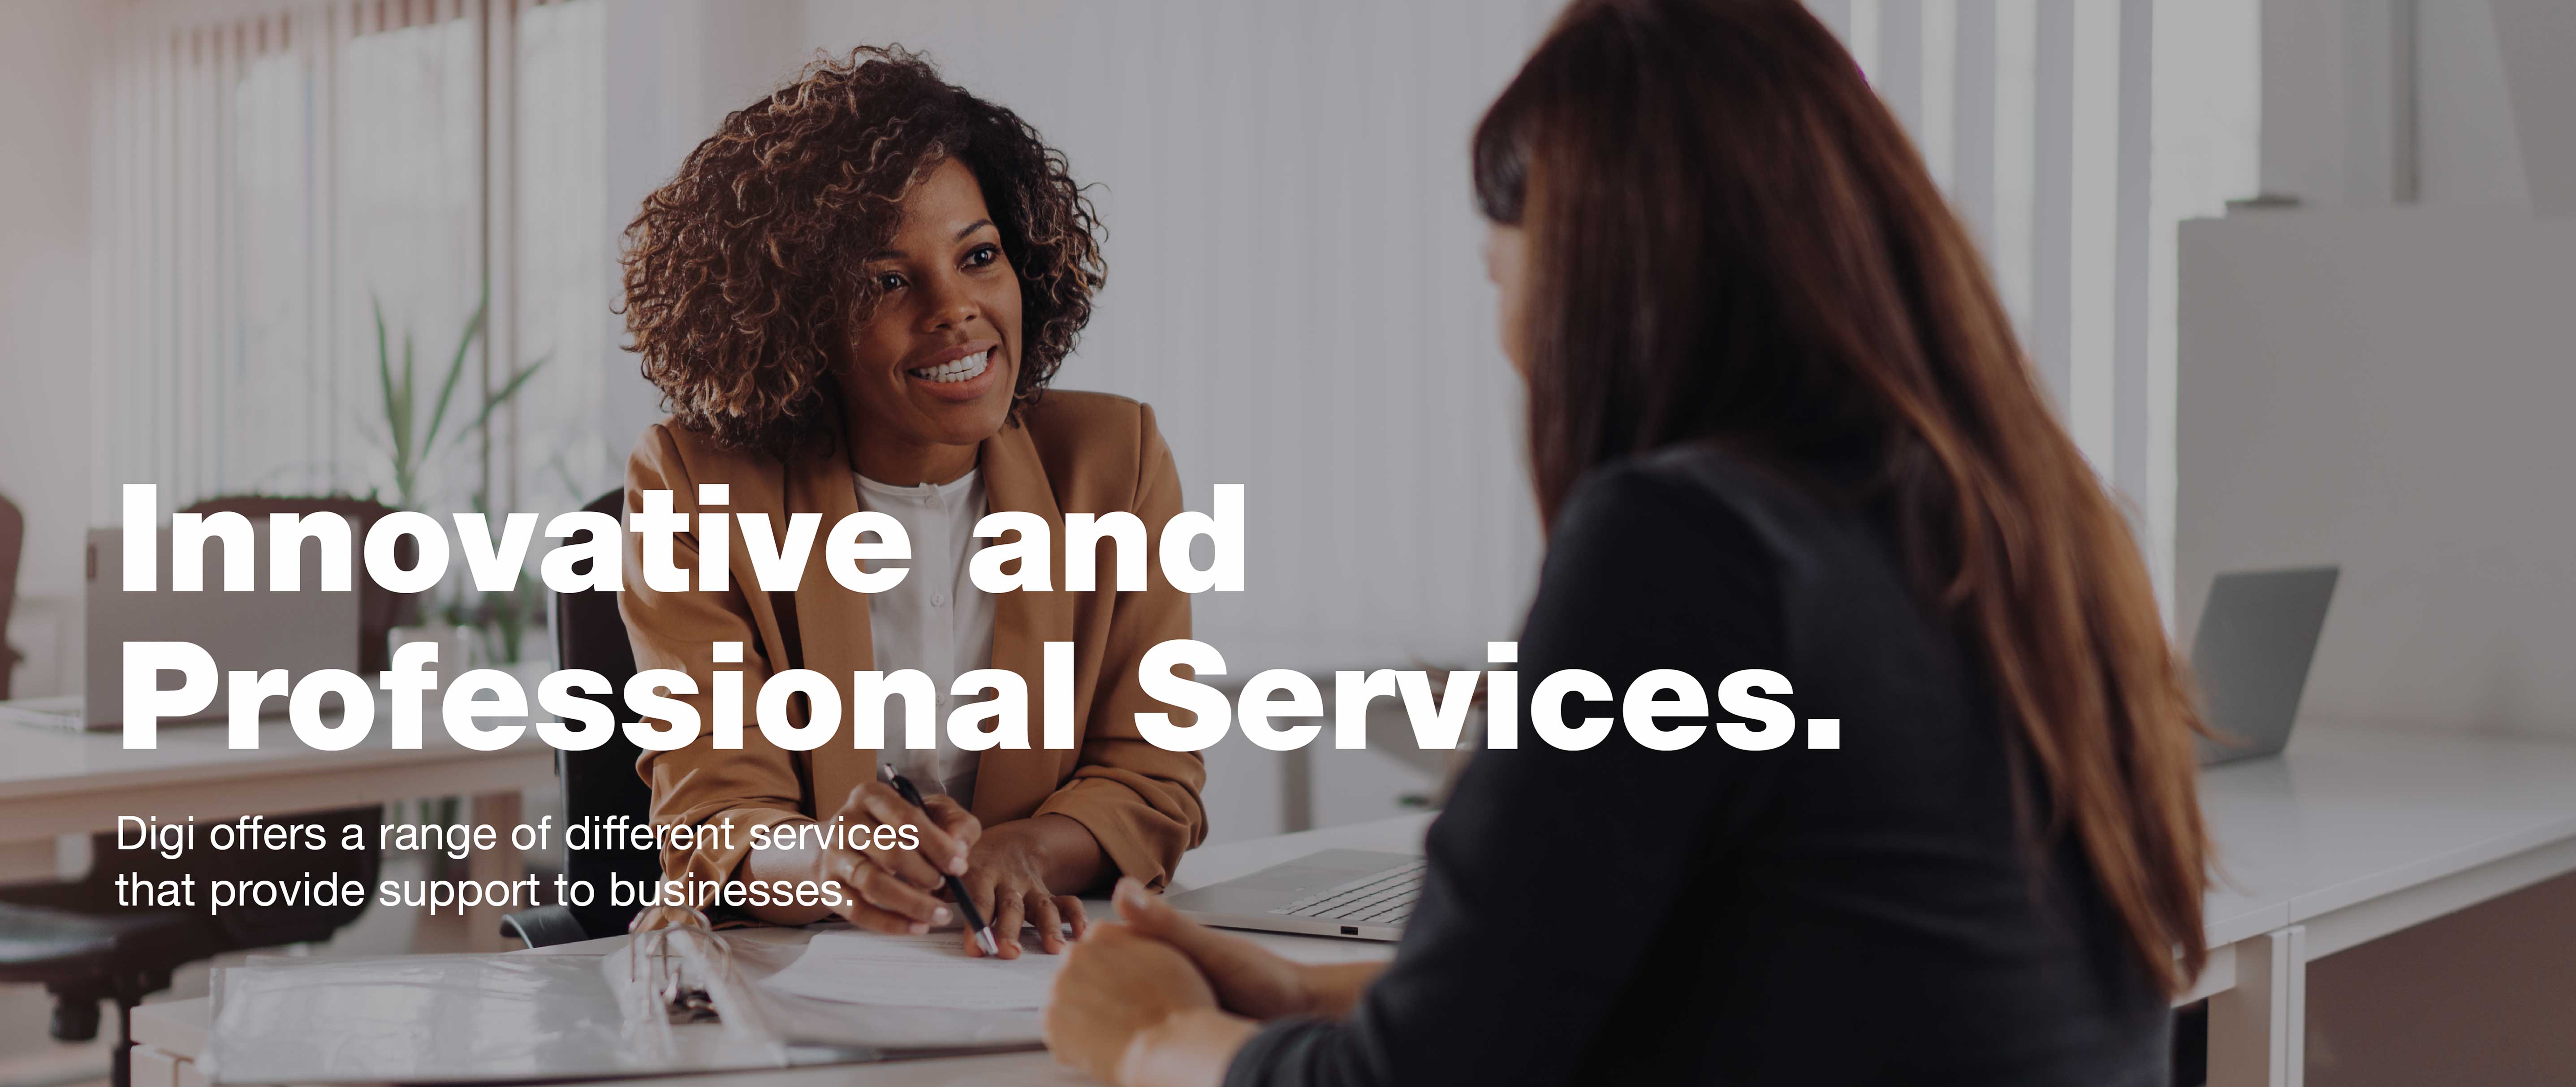 Professional Services | Digi Business 